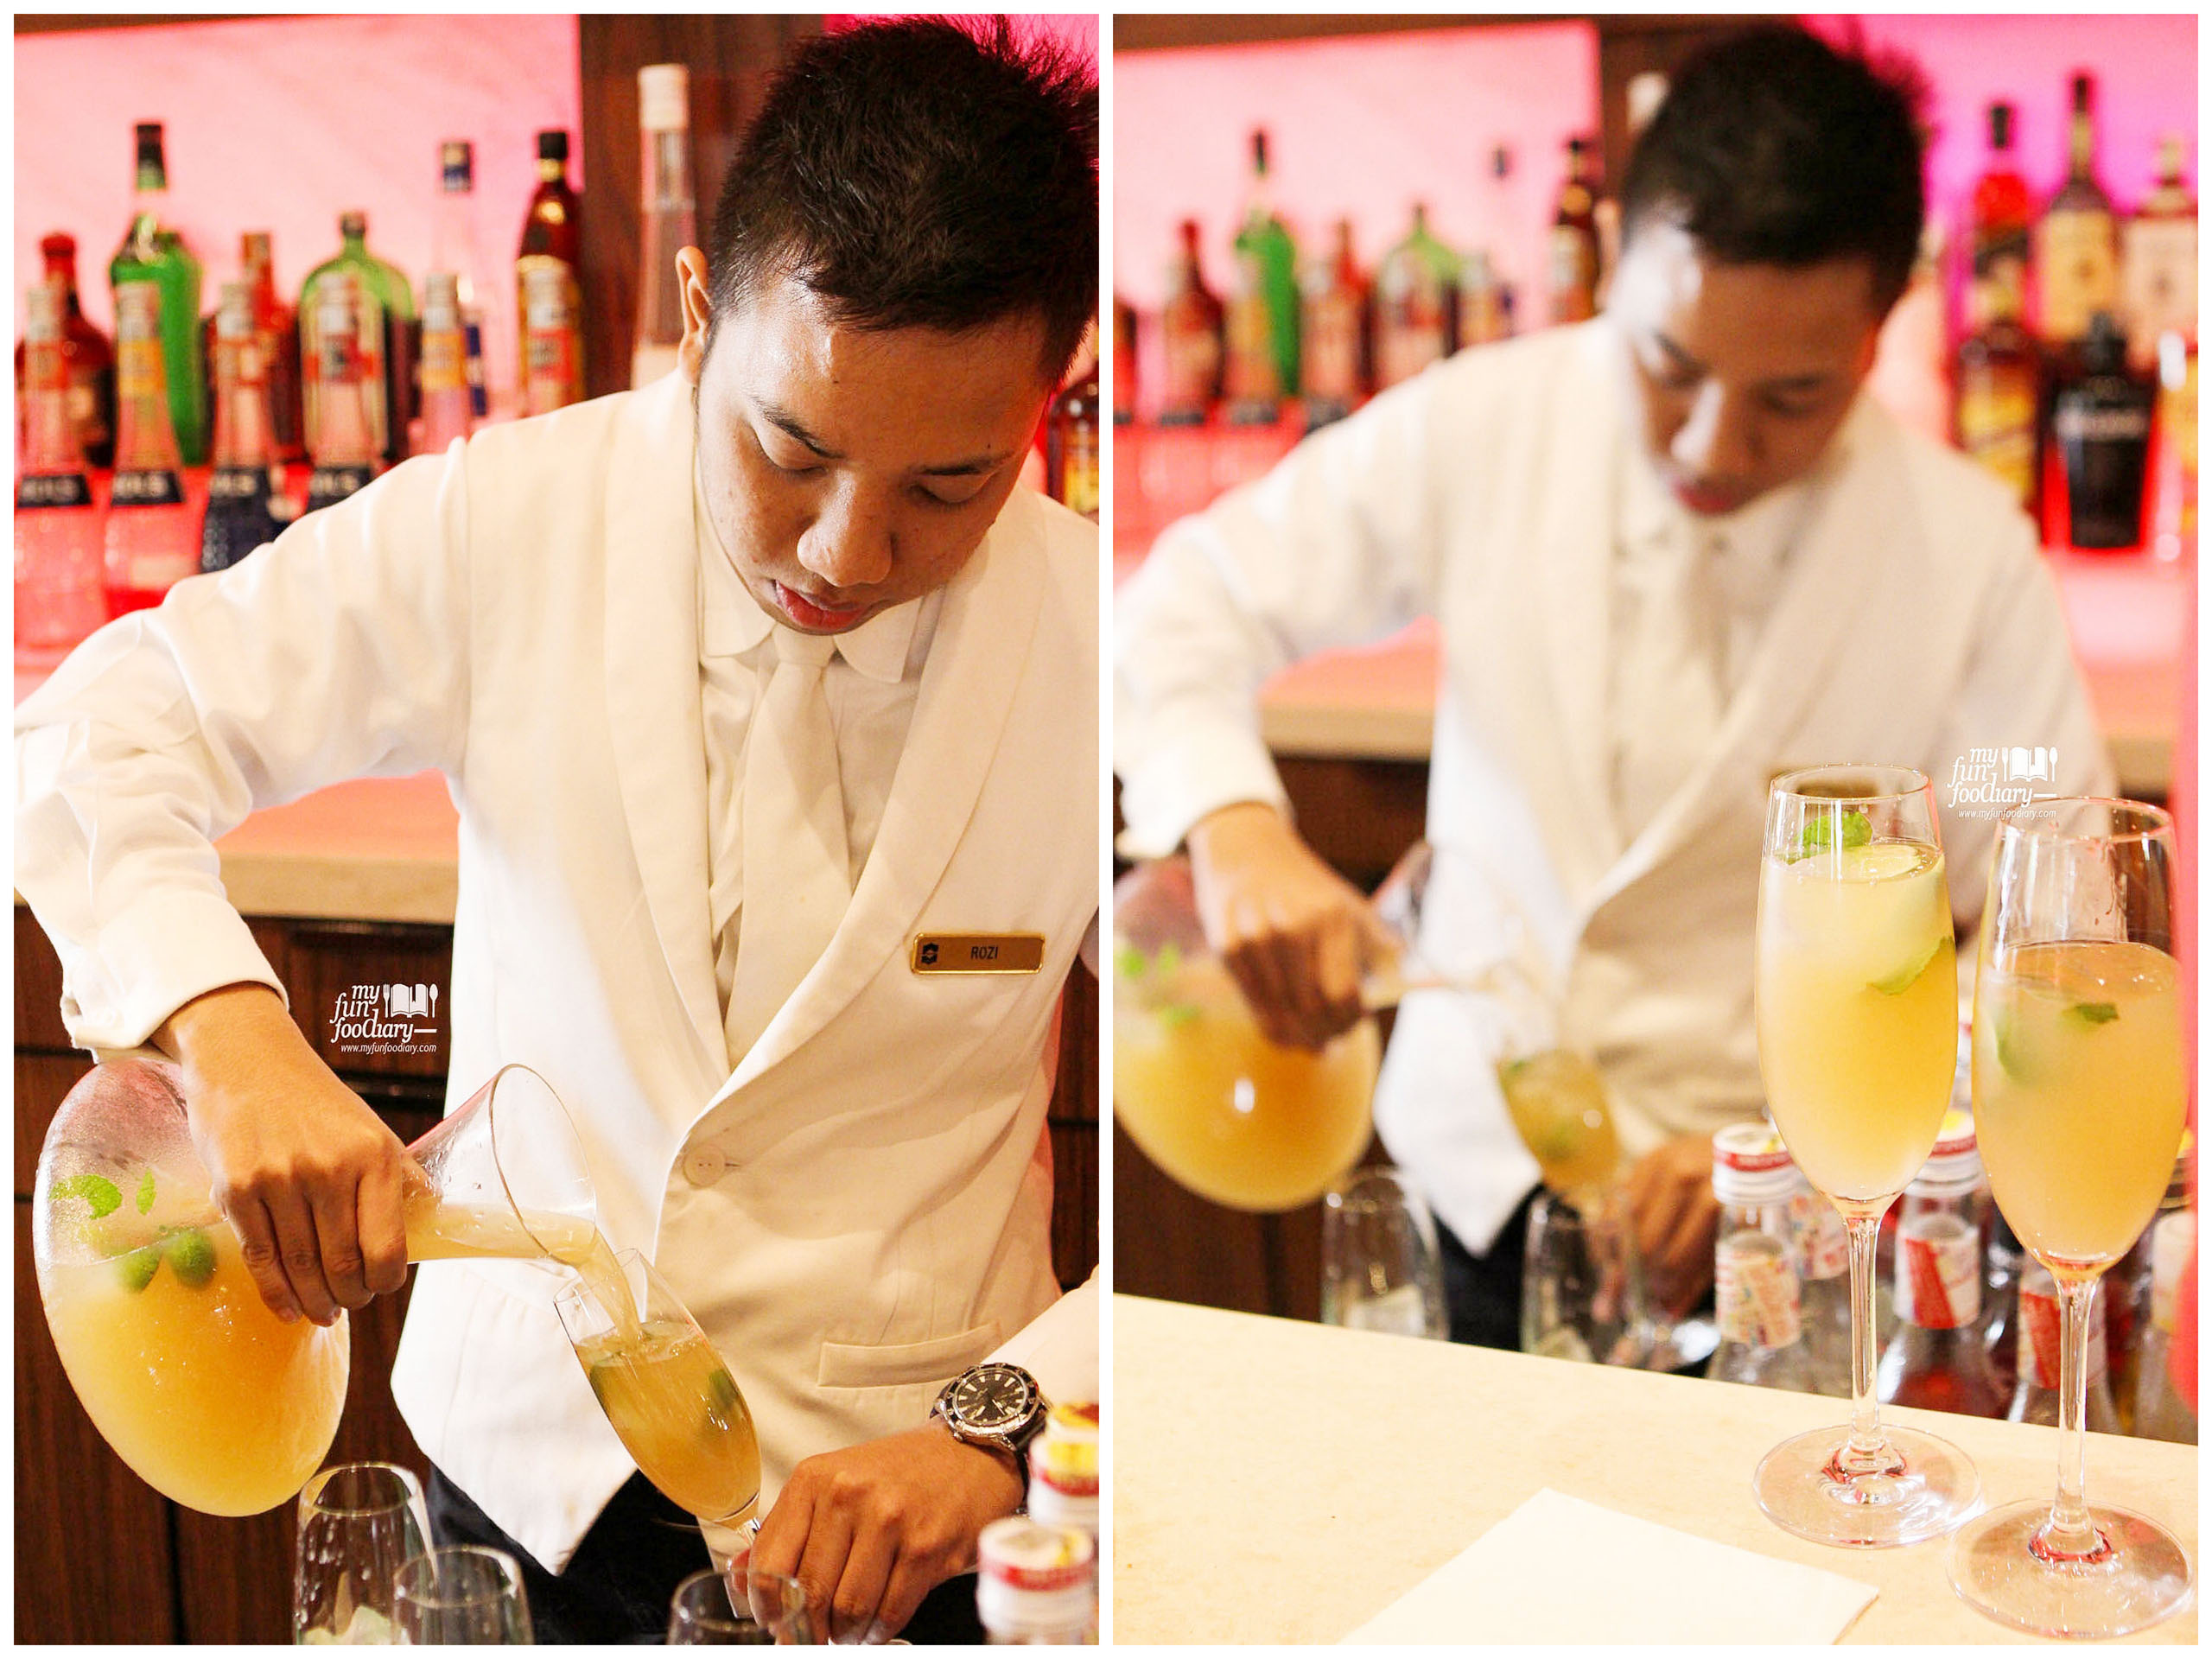 Bartender at Rosso Shangri-La Jakarta by Myfunfoodiary